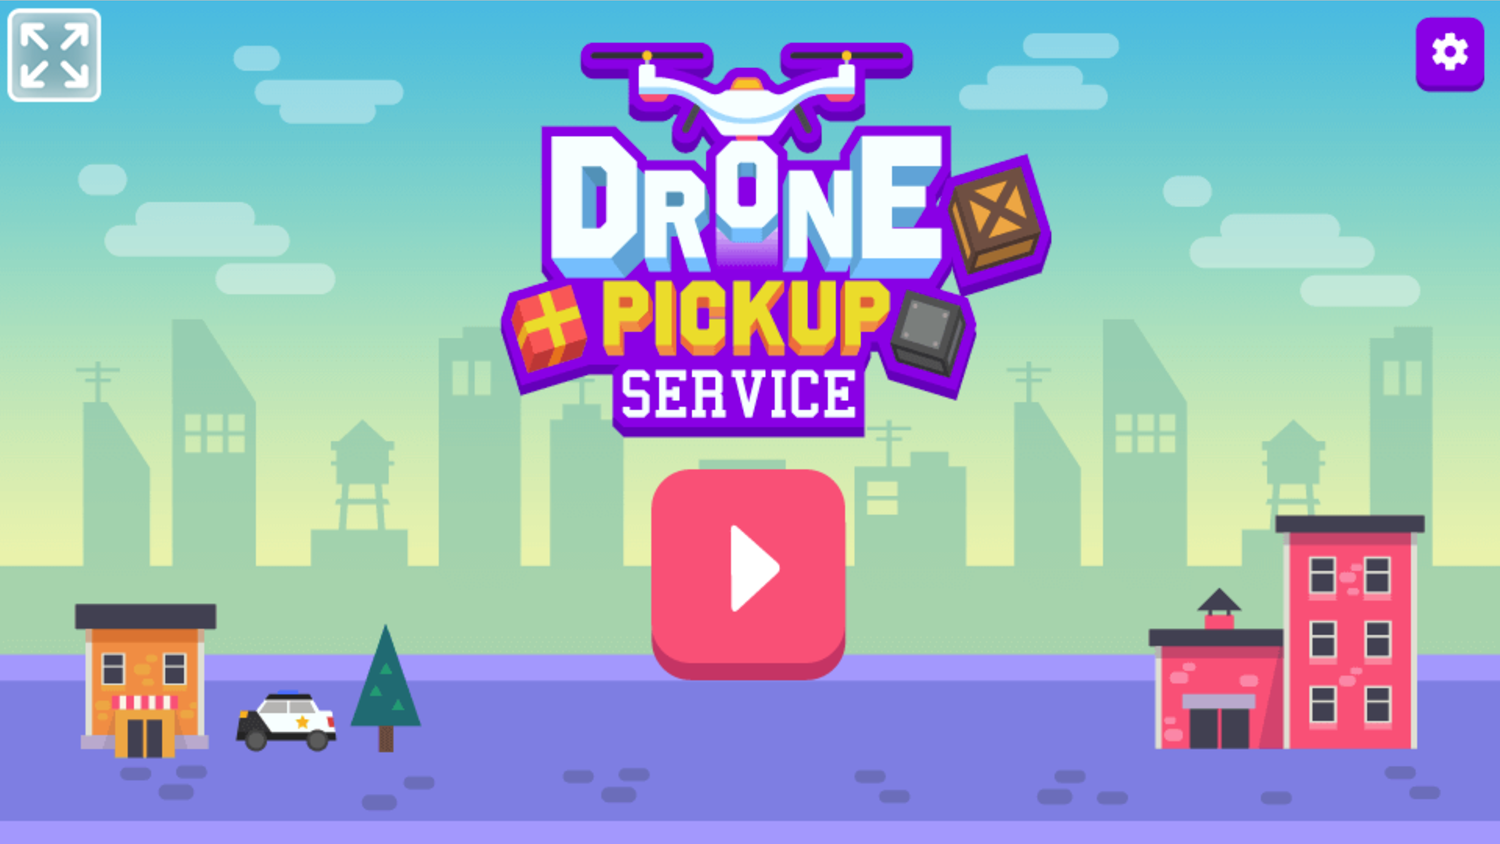 Drone Pickup Service Game Welcome Screen Screenshot.